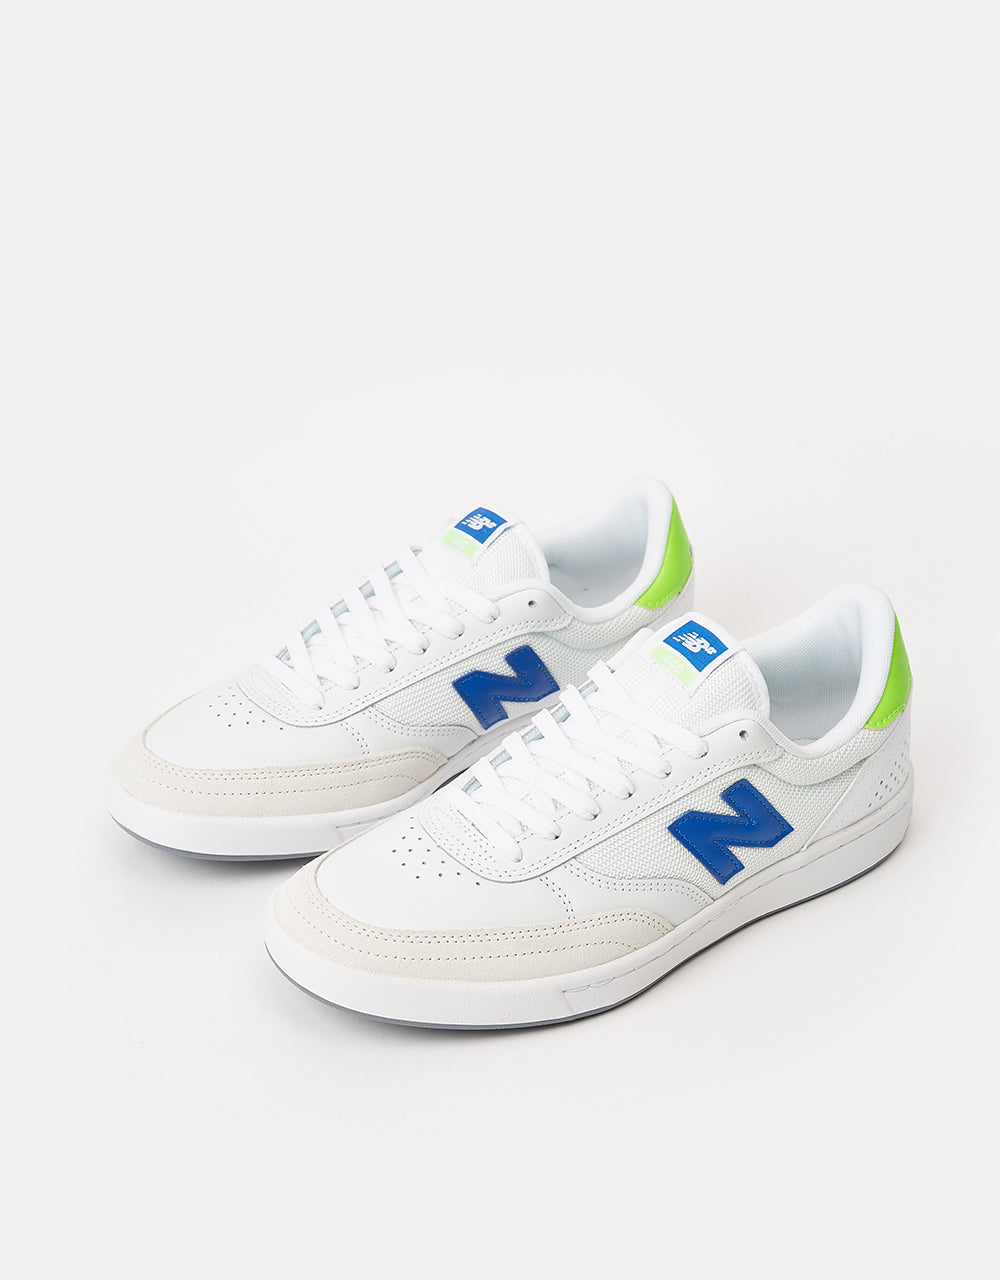 New Balance Numeric 440 Skate Shoes - White/Royal